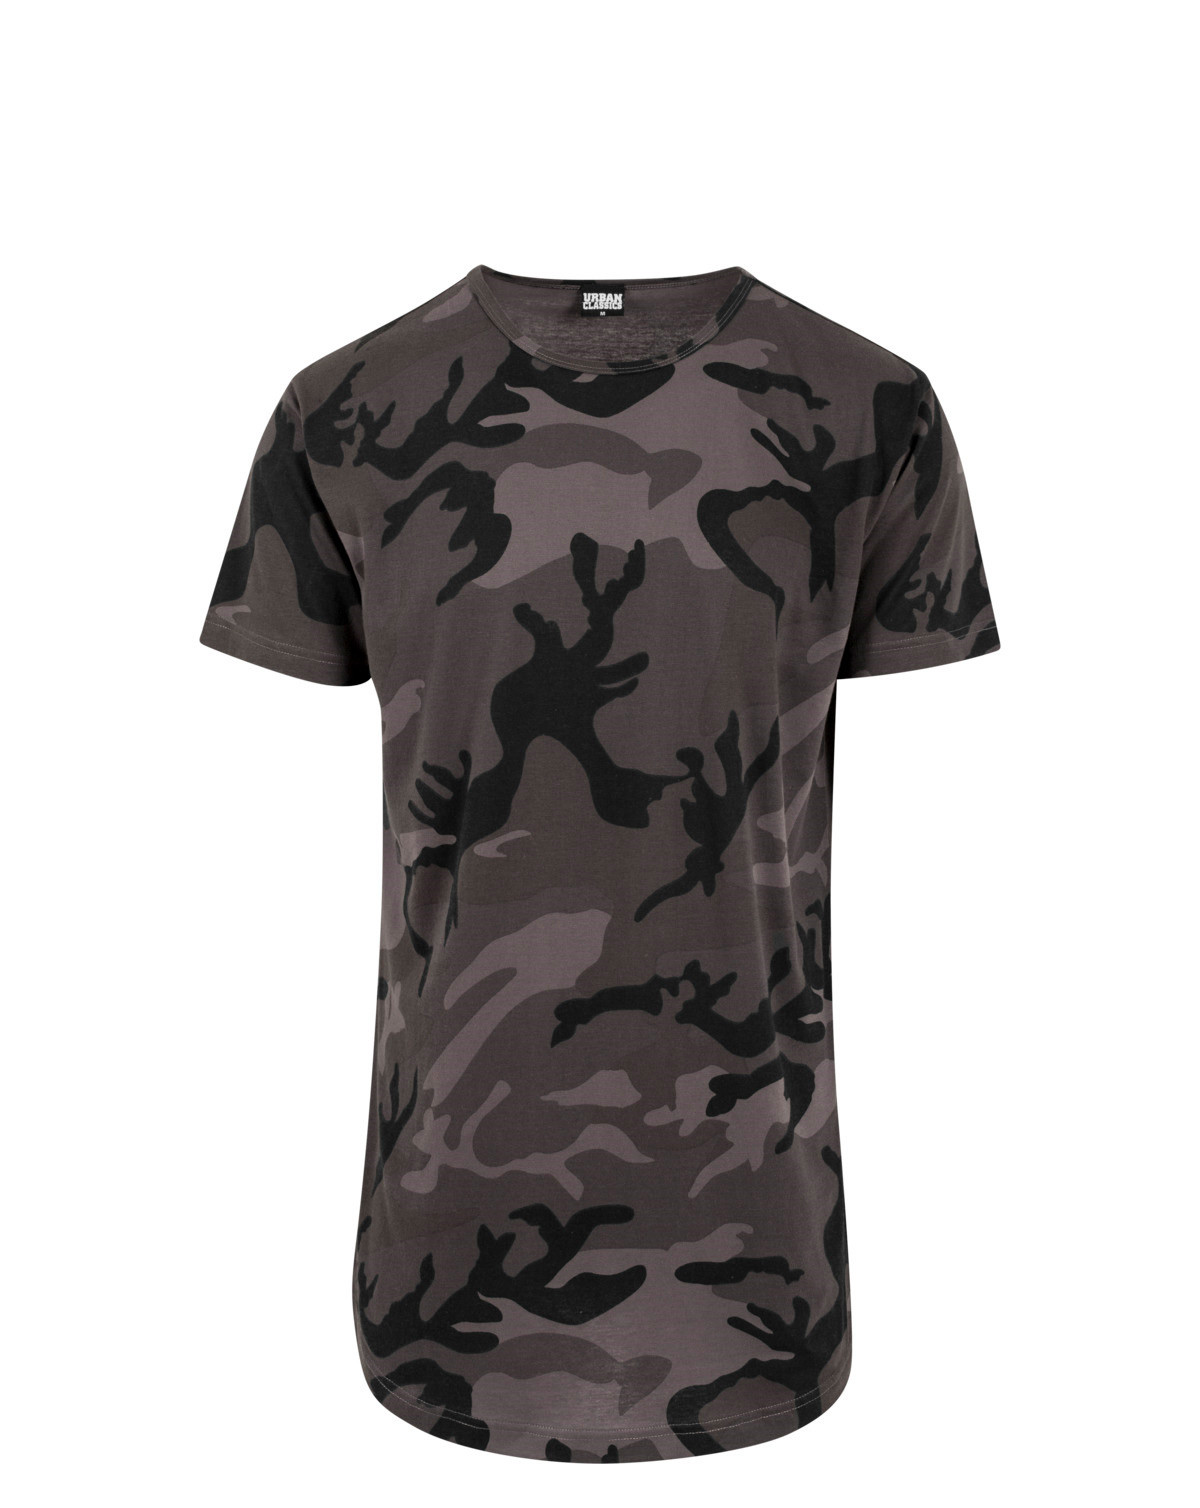 #3 - Urban Classics Lang Camouflage T-shirt (Dark Camo, S)